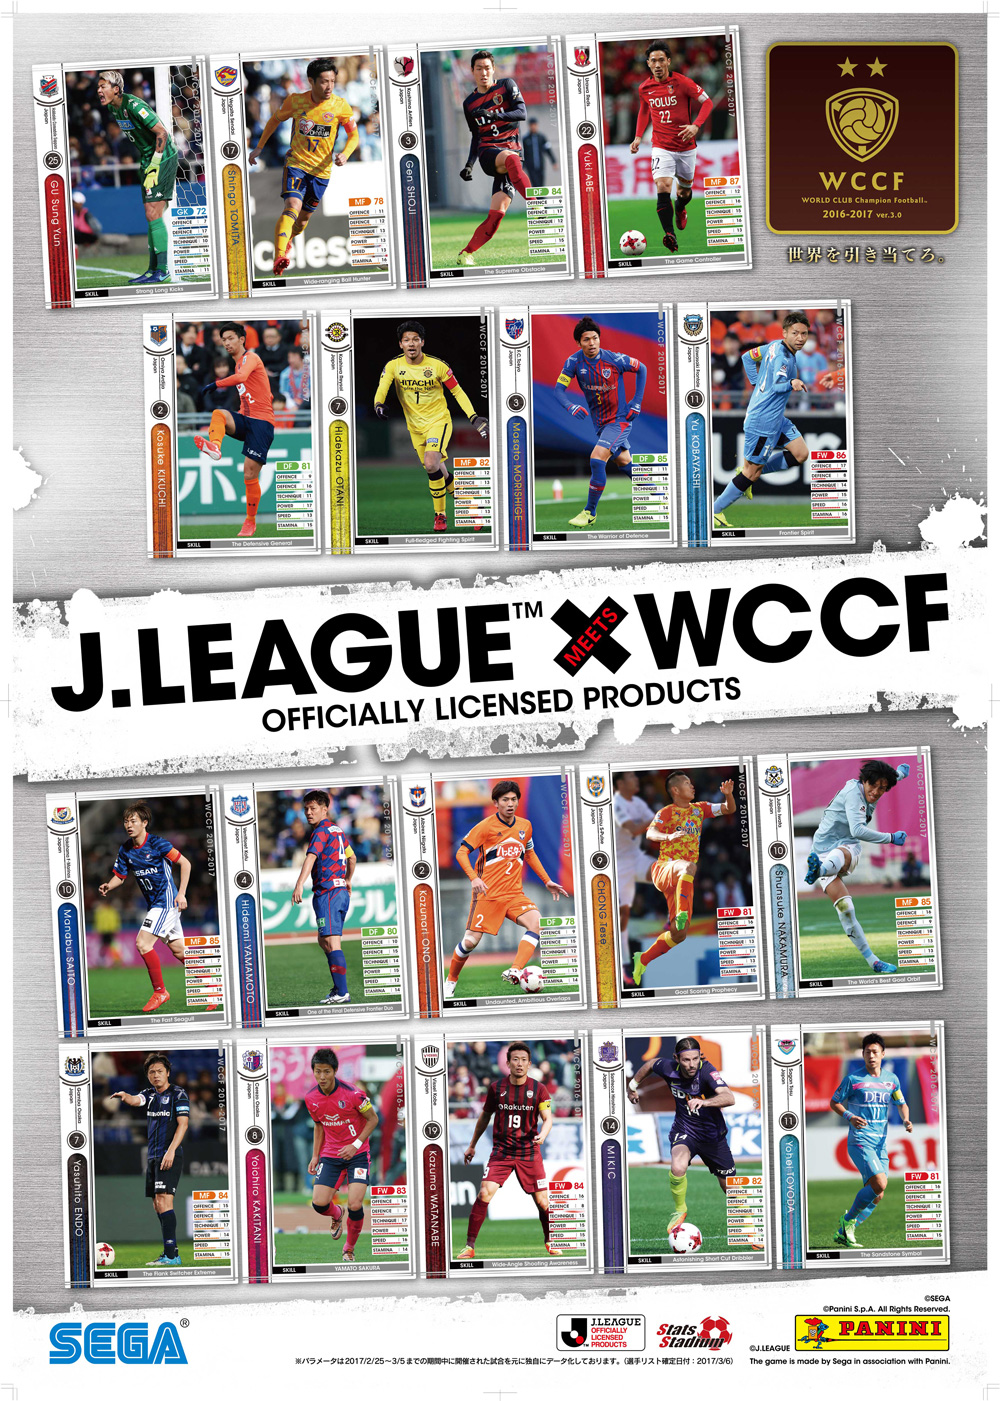 Wccf 16 17 Ver 3 0 9月14日稼働開始 J1選手カードが登場 サッカーキング